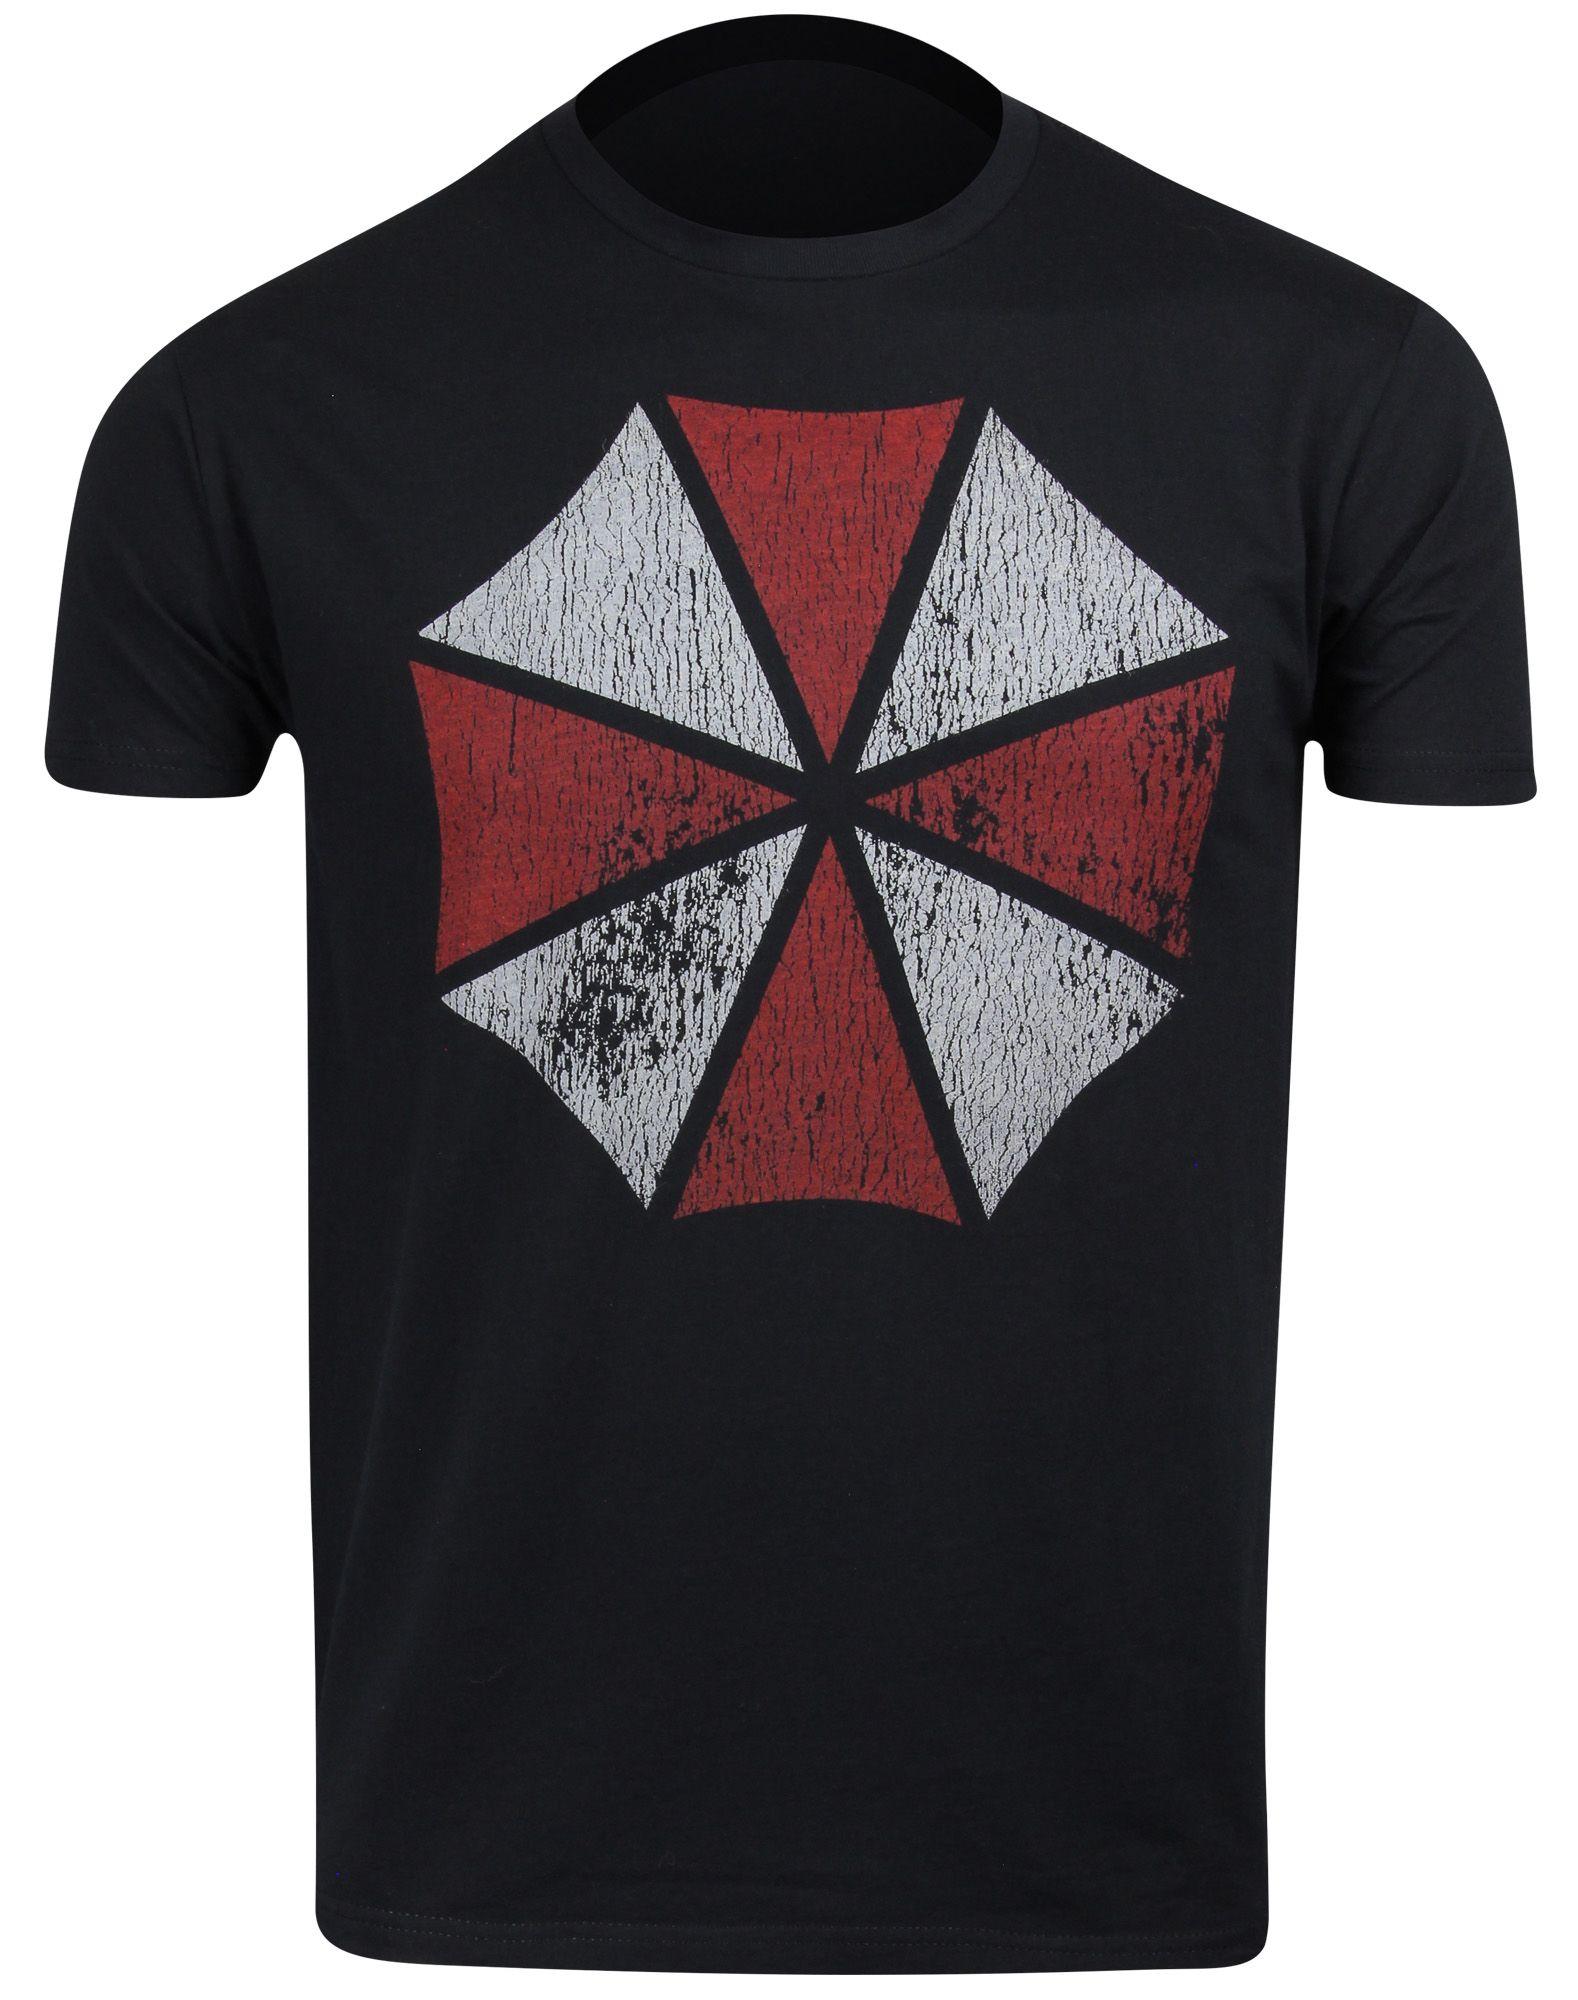 Re Umbrella Logo - Capcom Resident Evil Umbrella Logo T-Shirt (Black) | eBay